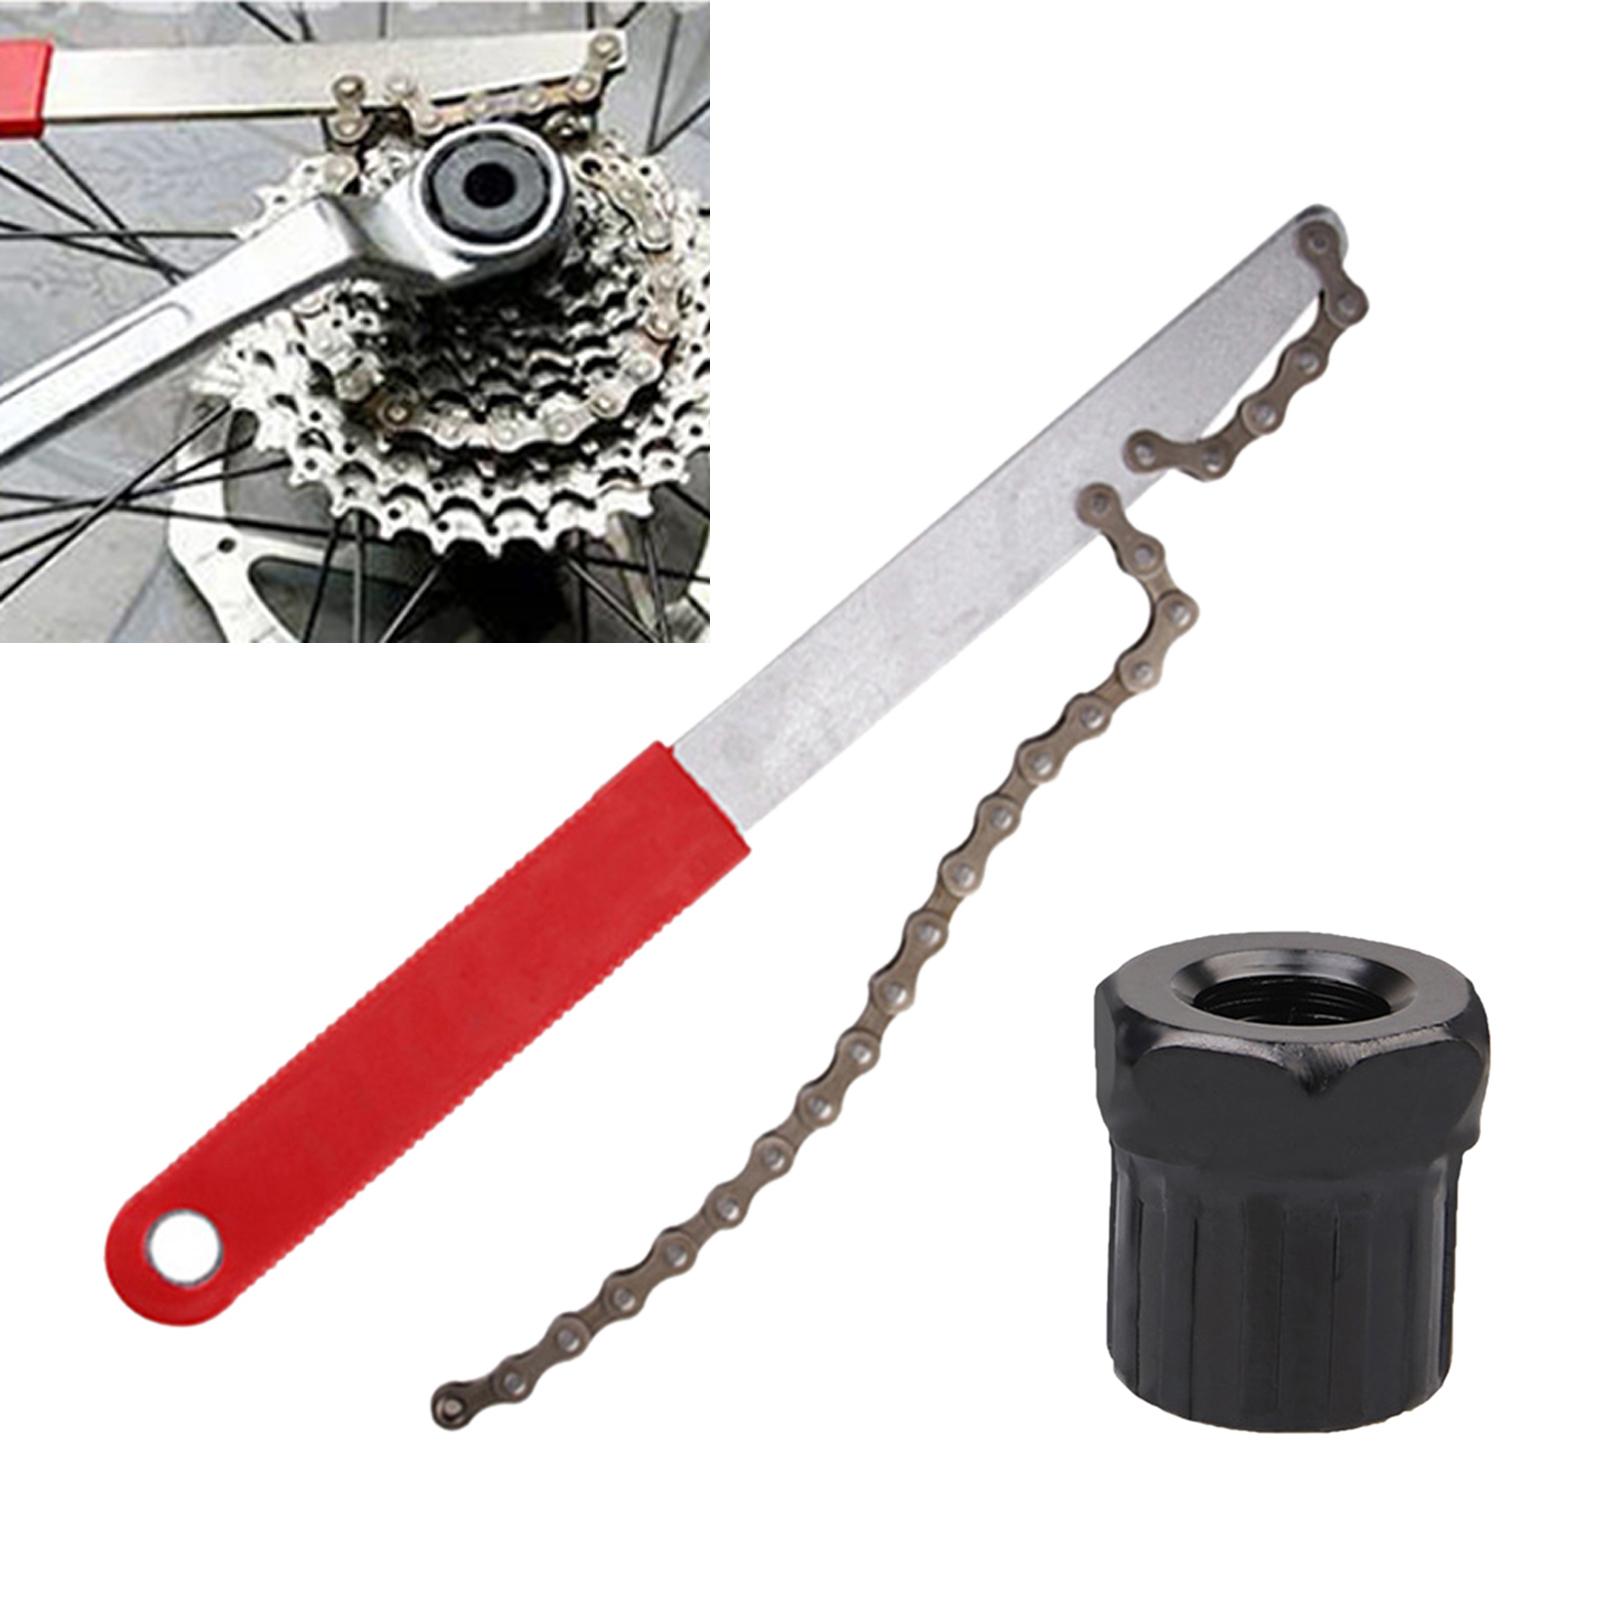 Bicycle Bike Freewheel Chain Whip Sprocket Lockring Remover Repair Tools